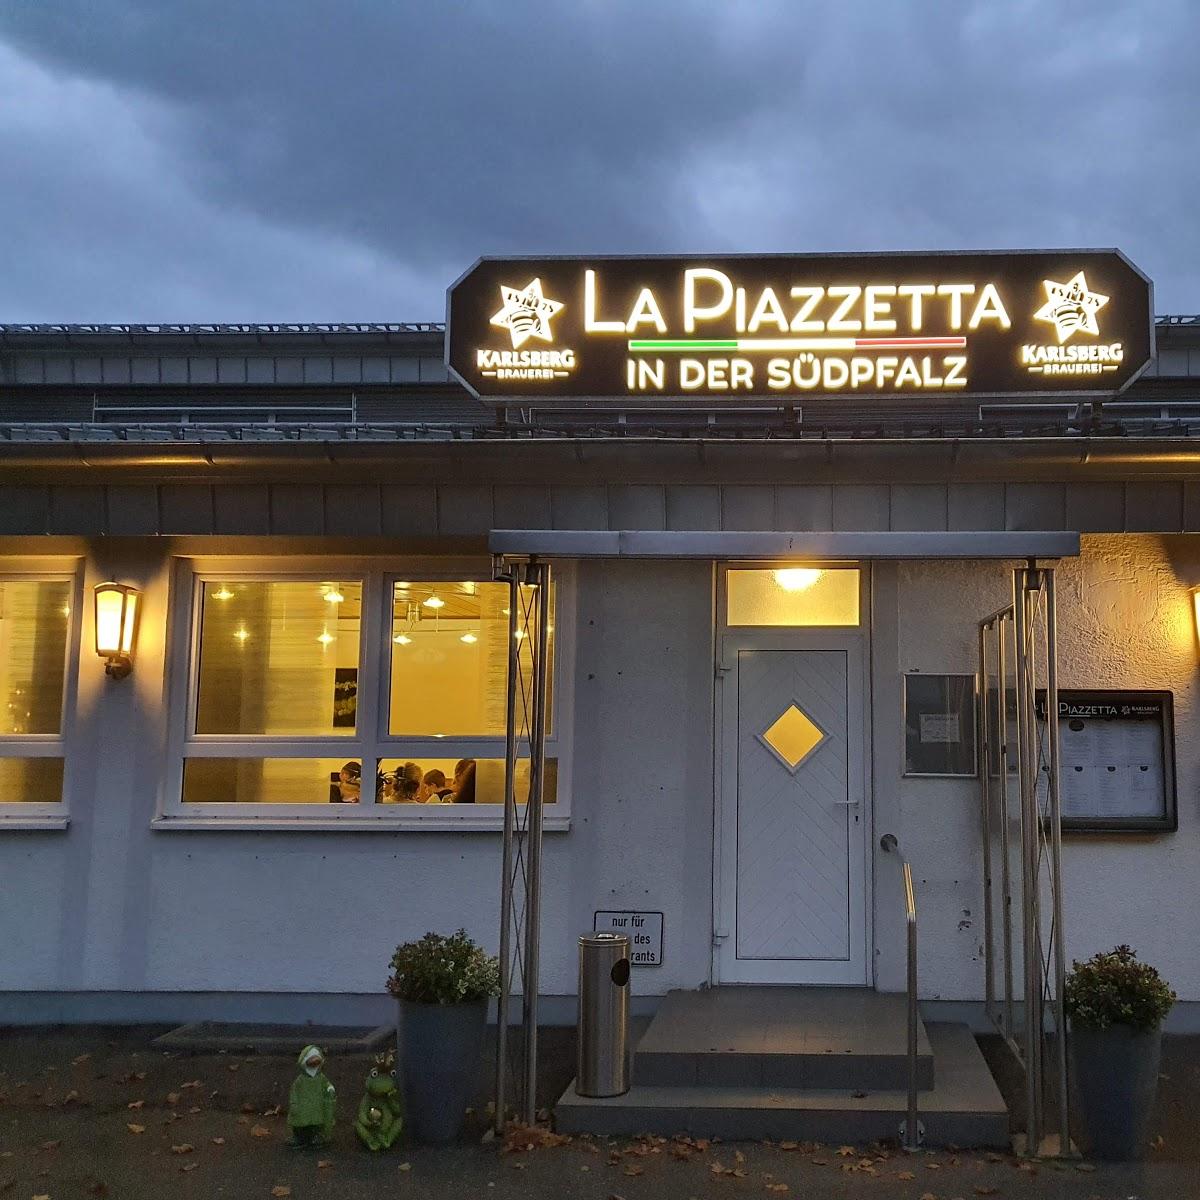 Restaurant "La Piazzetta" in Kapsweyer